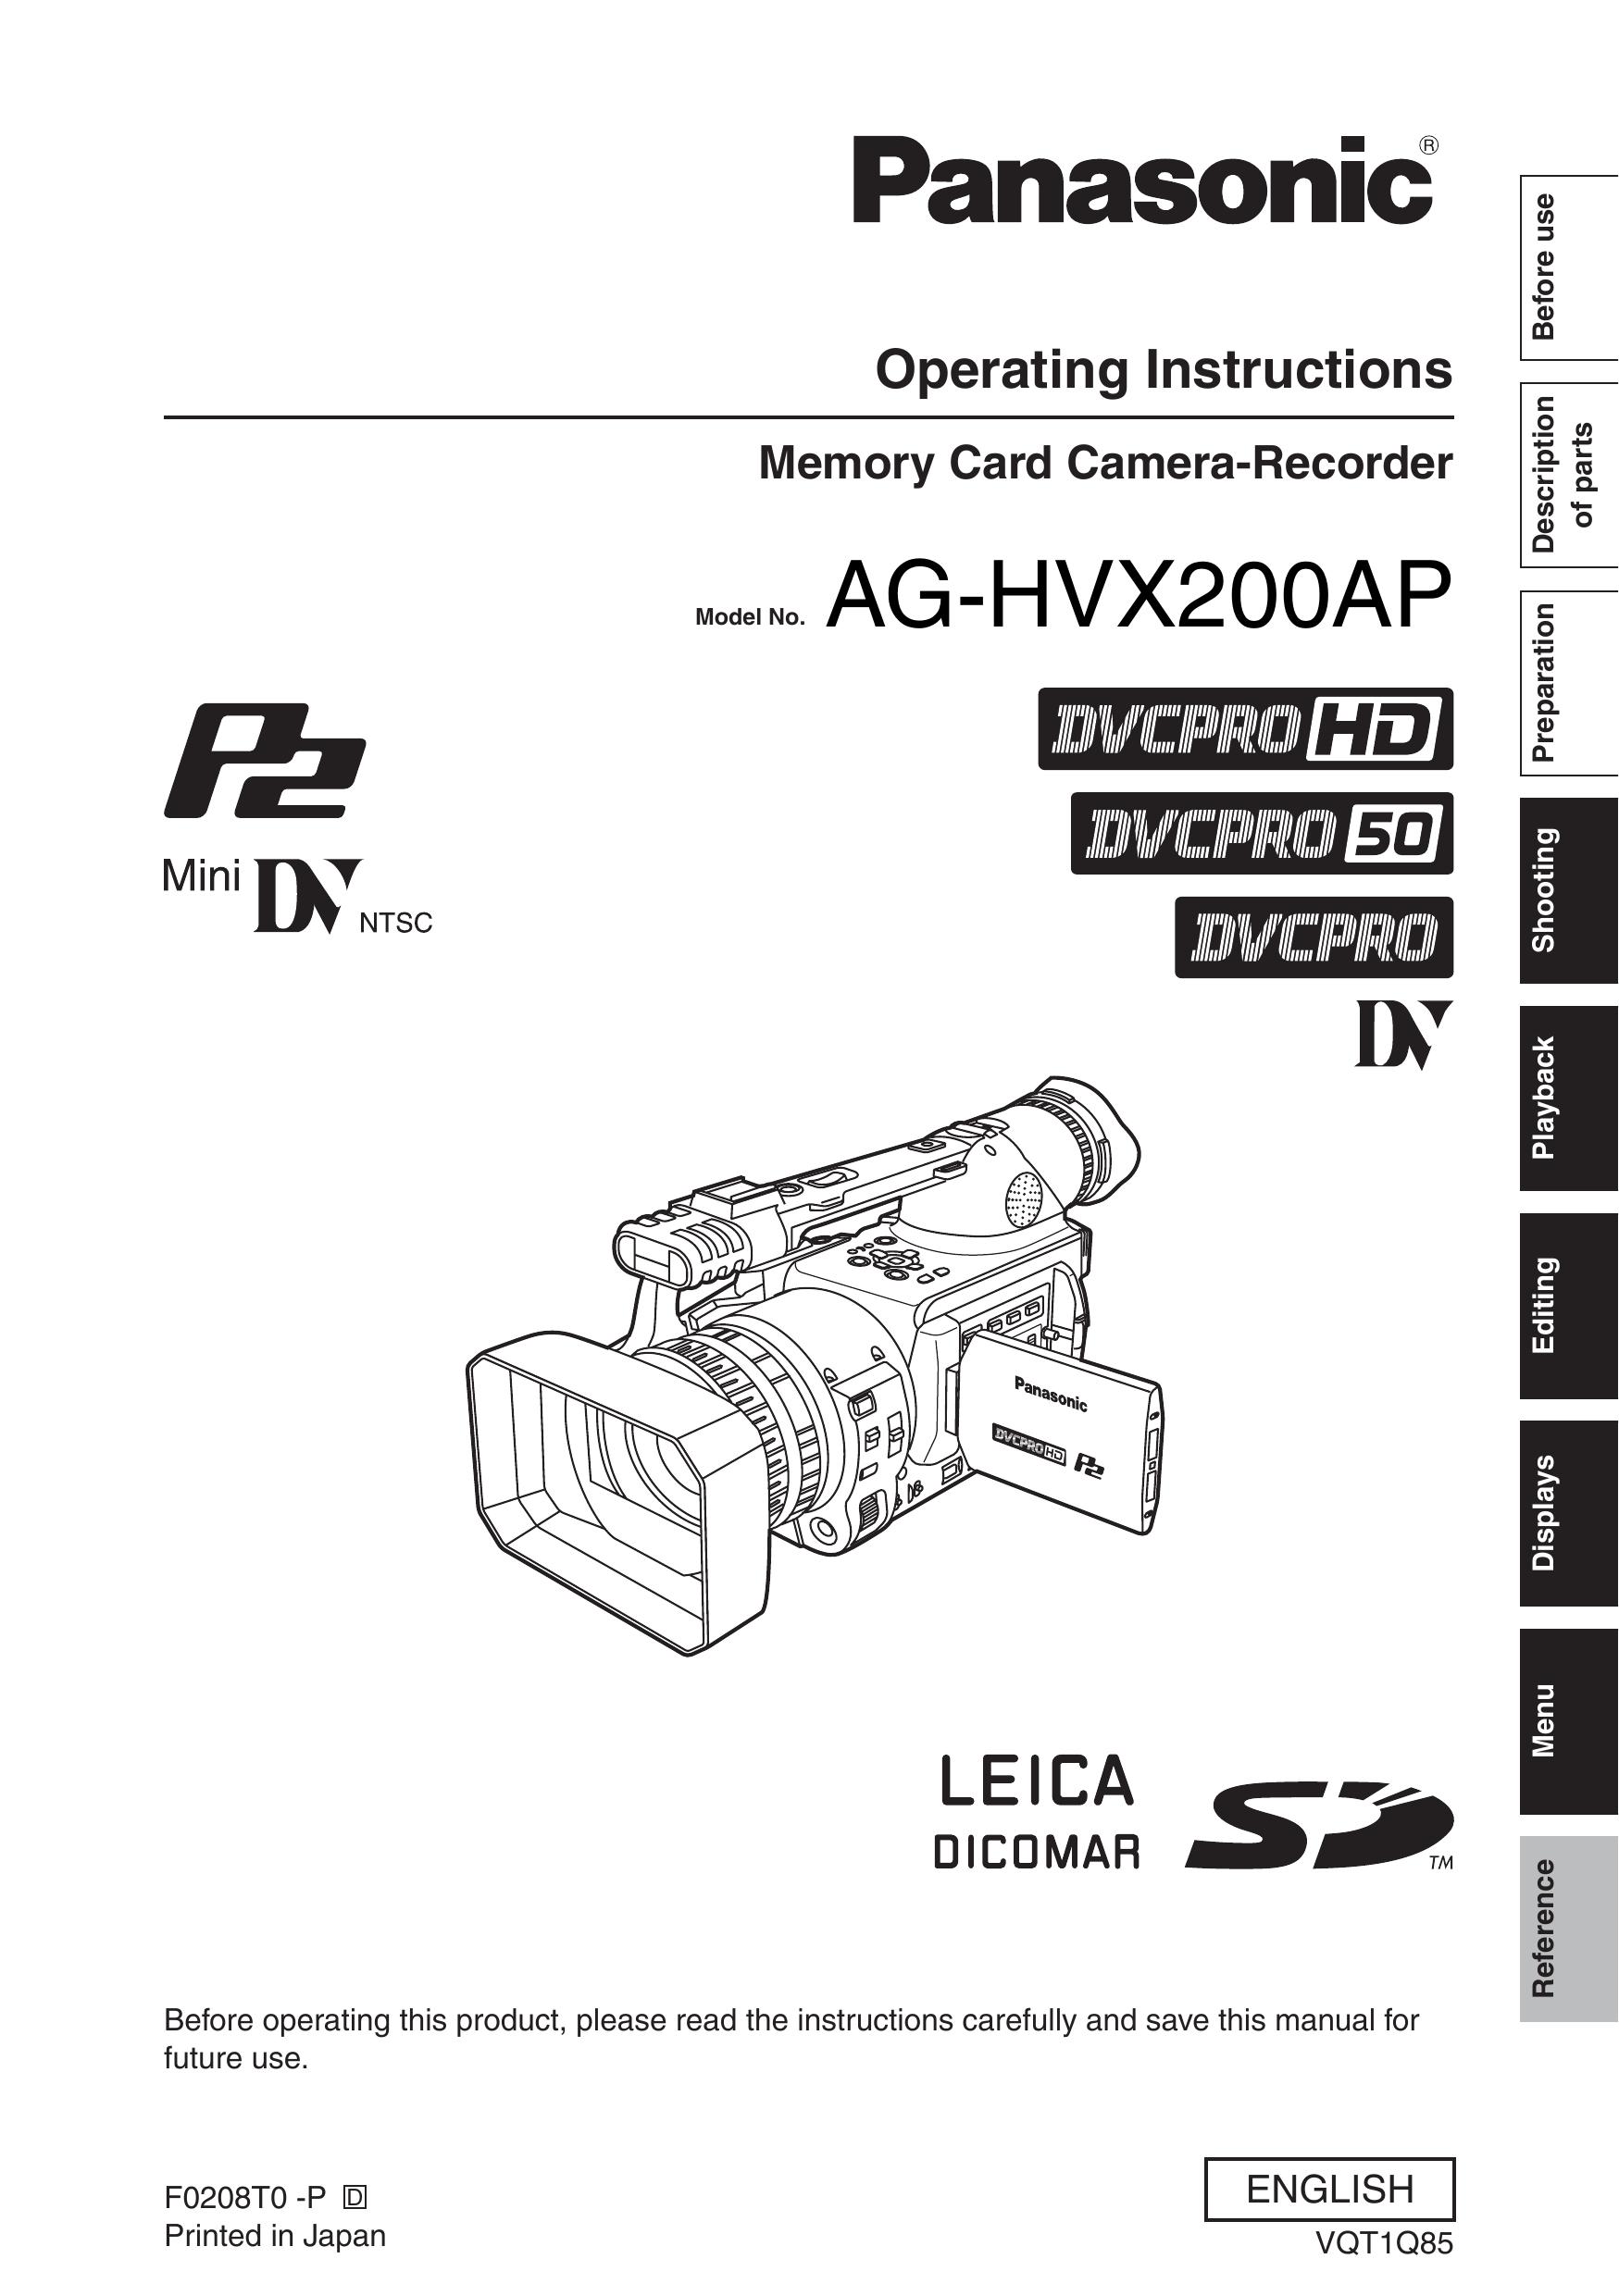 Panasonic AG-HVX200AP Camera Accessories User Manual